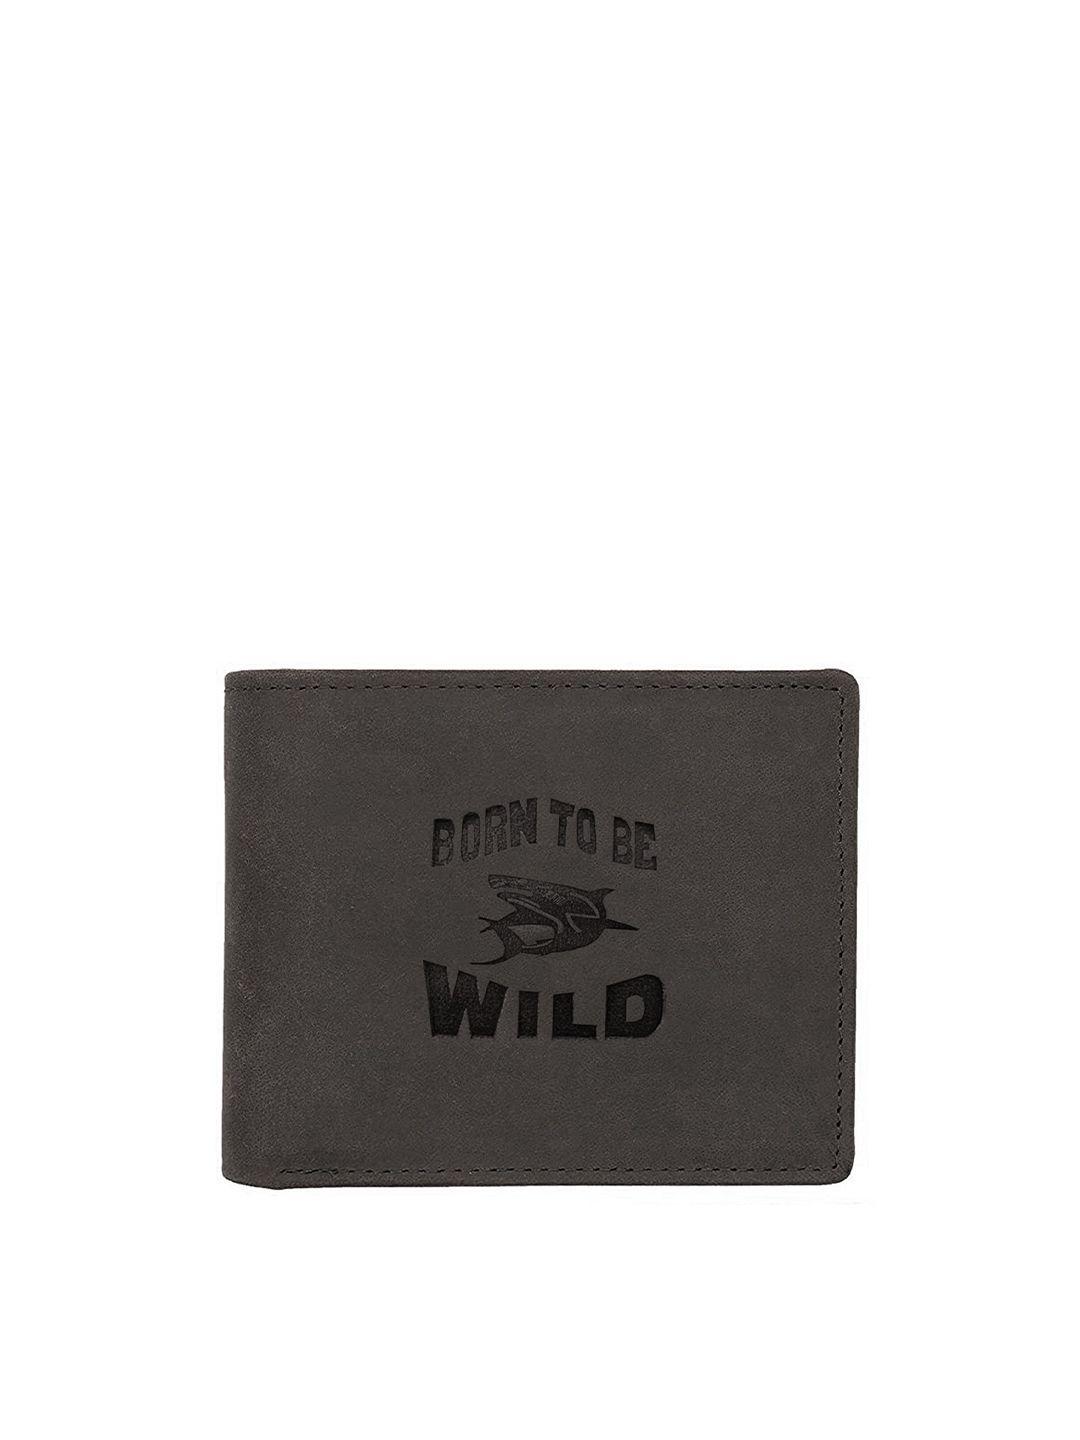 wildhorn men brand logo printed rfid leather wallet